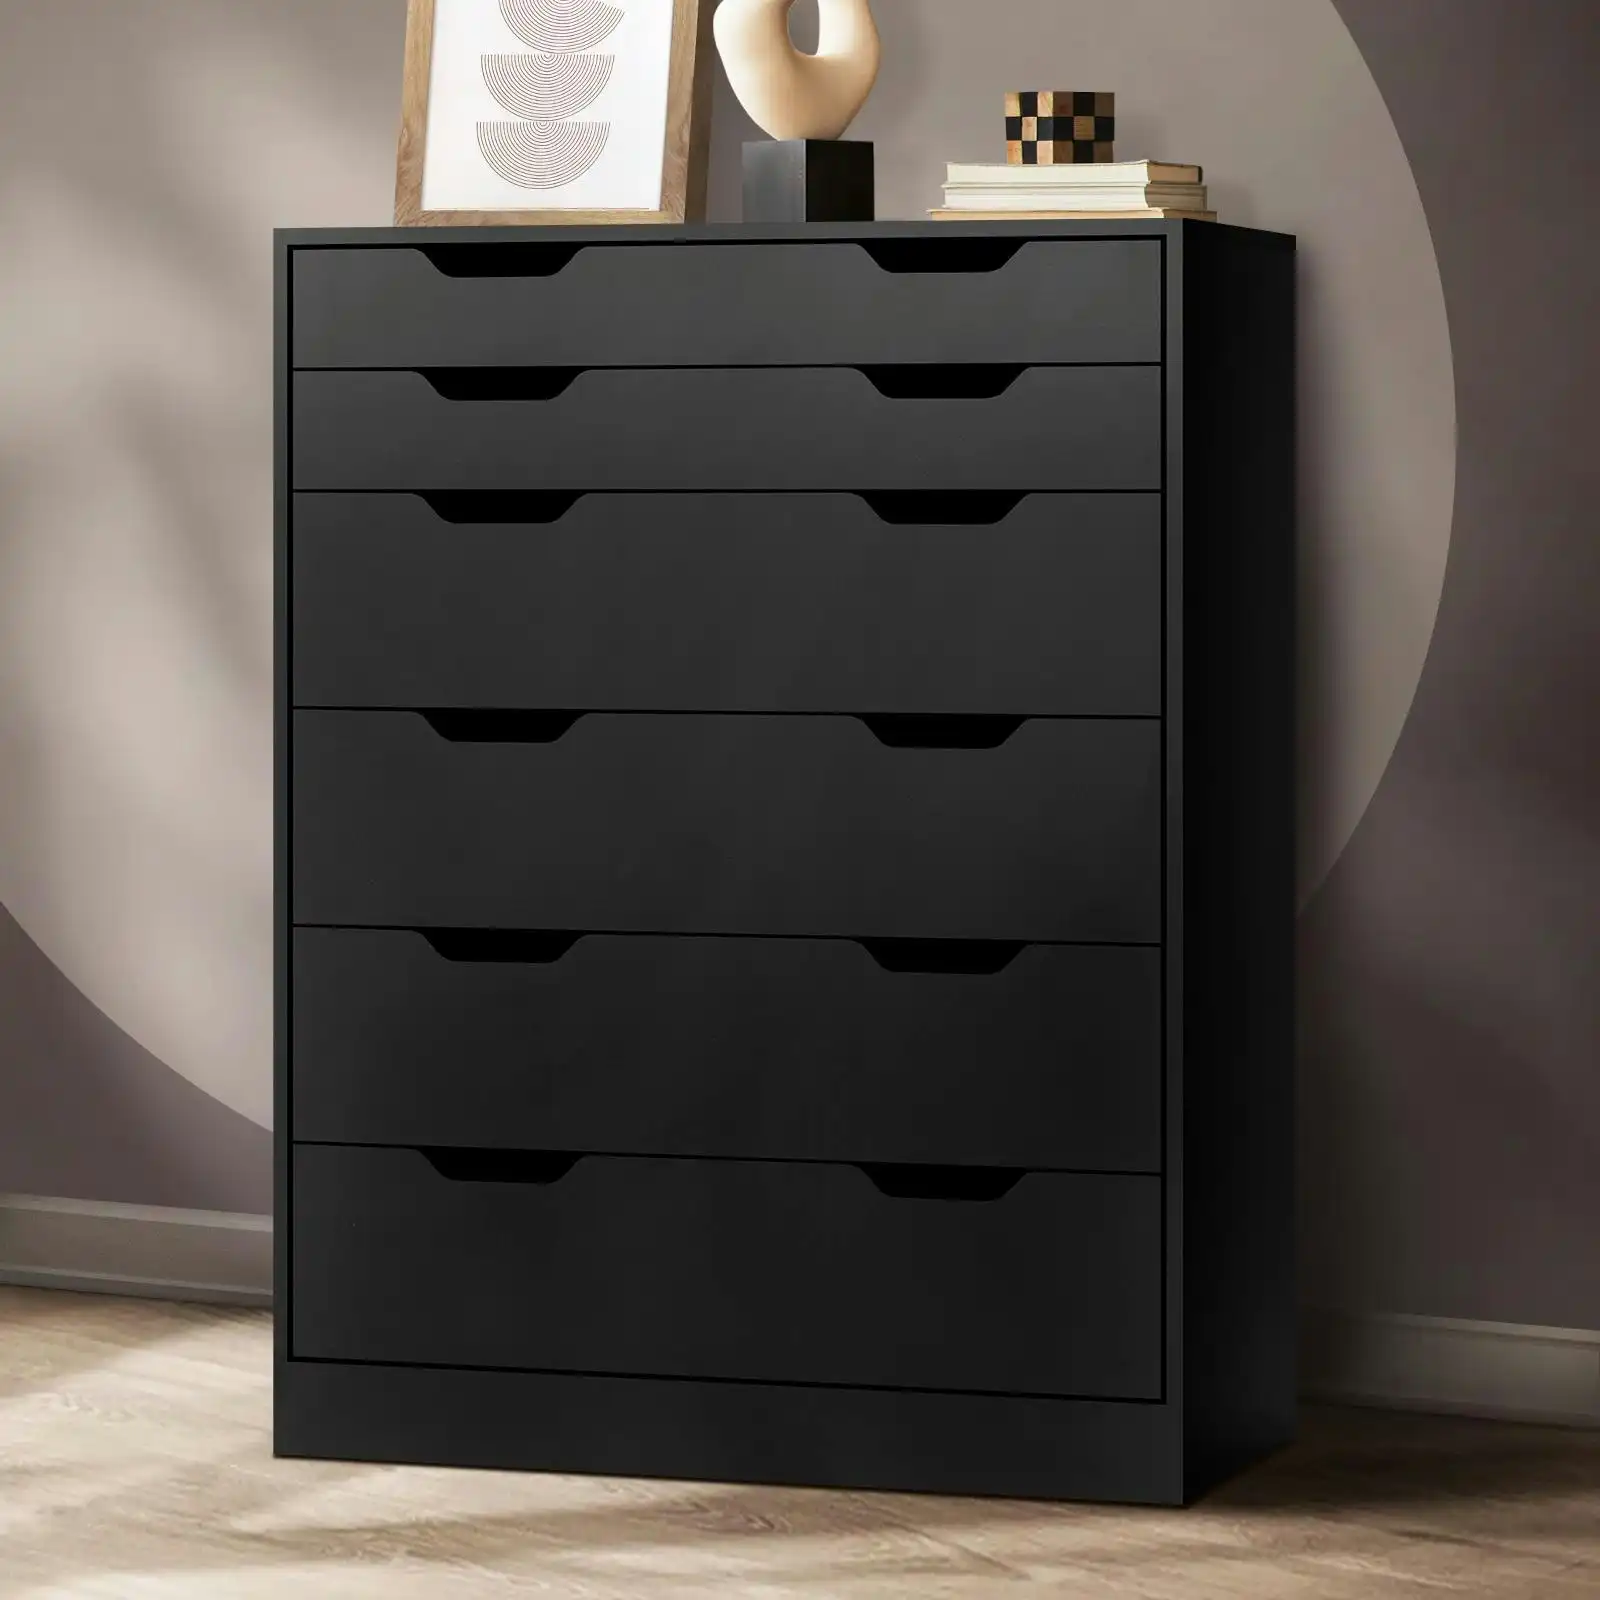 Oikiture 6 Chest of Drawers Tallboy Storage Cabinet Dresser Bedroom Black